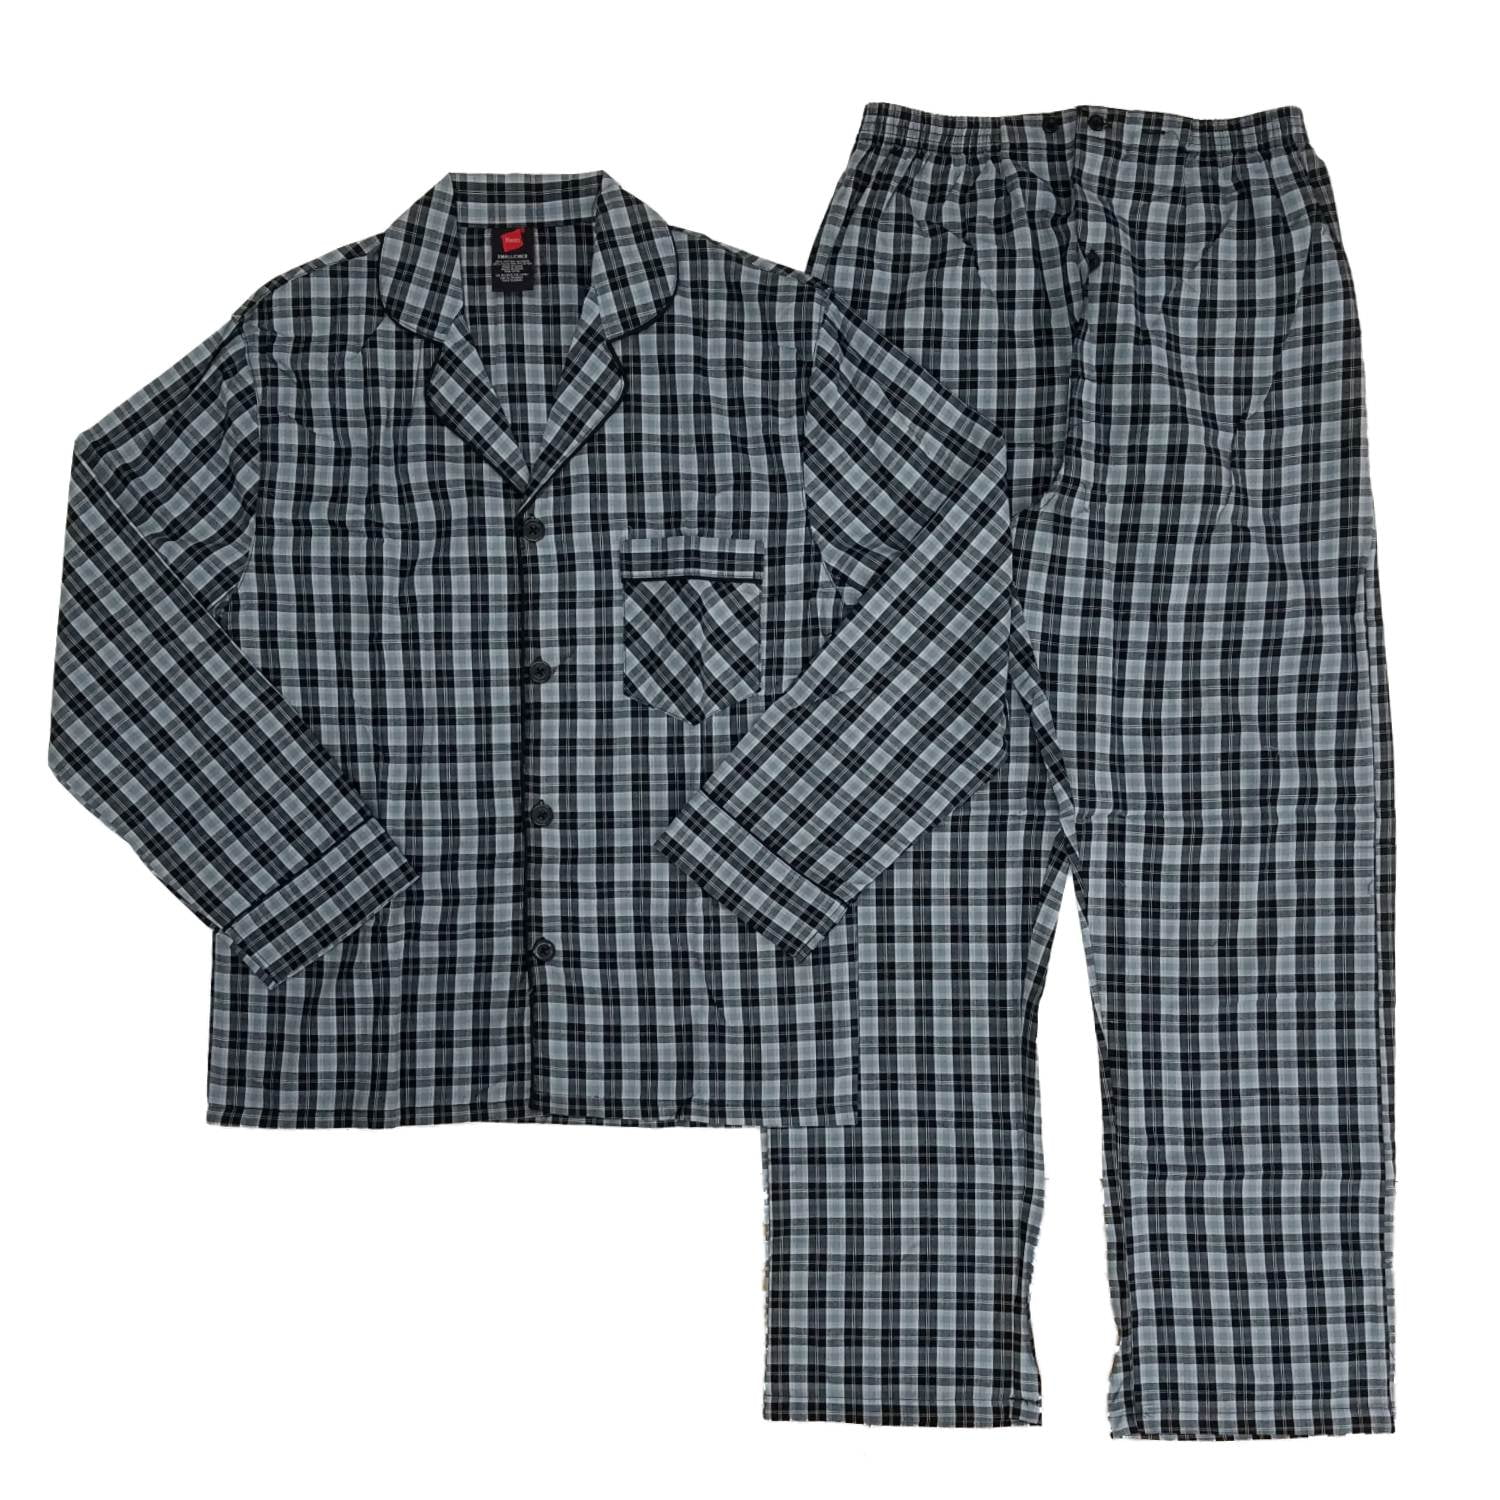 Black Plaid Hanes Men's 2pc Flannel Pajama Set 